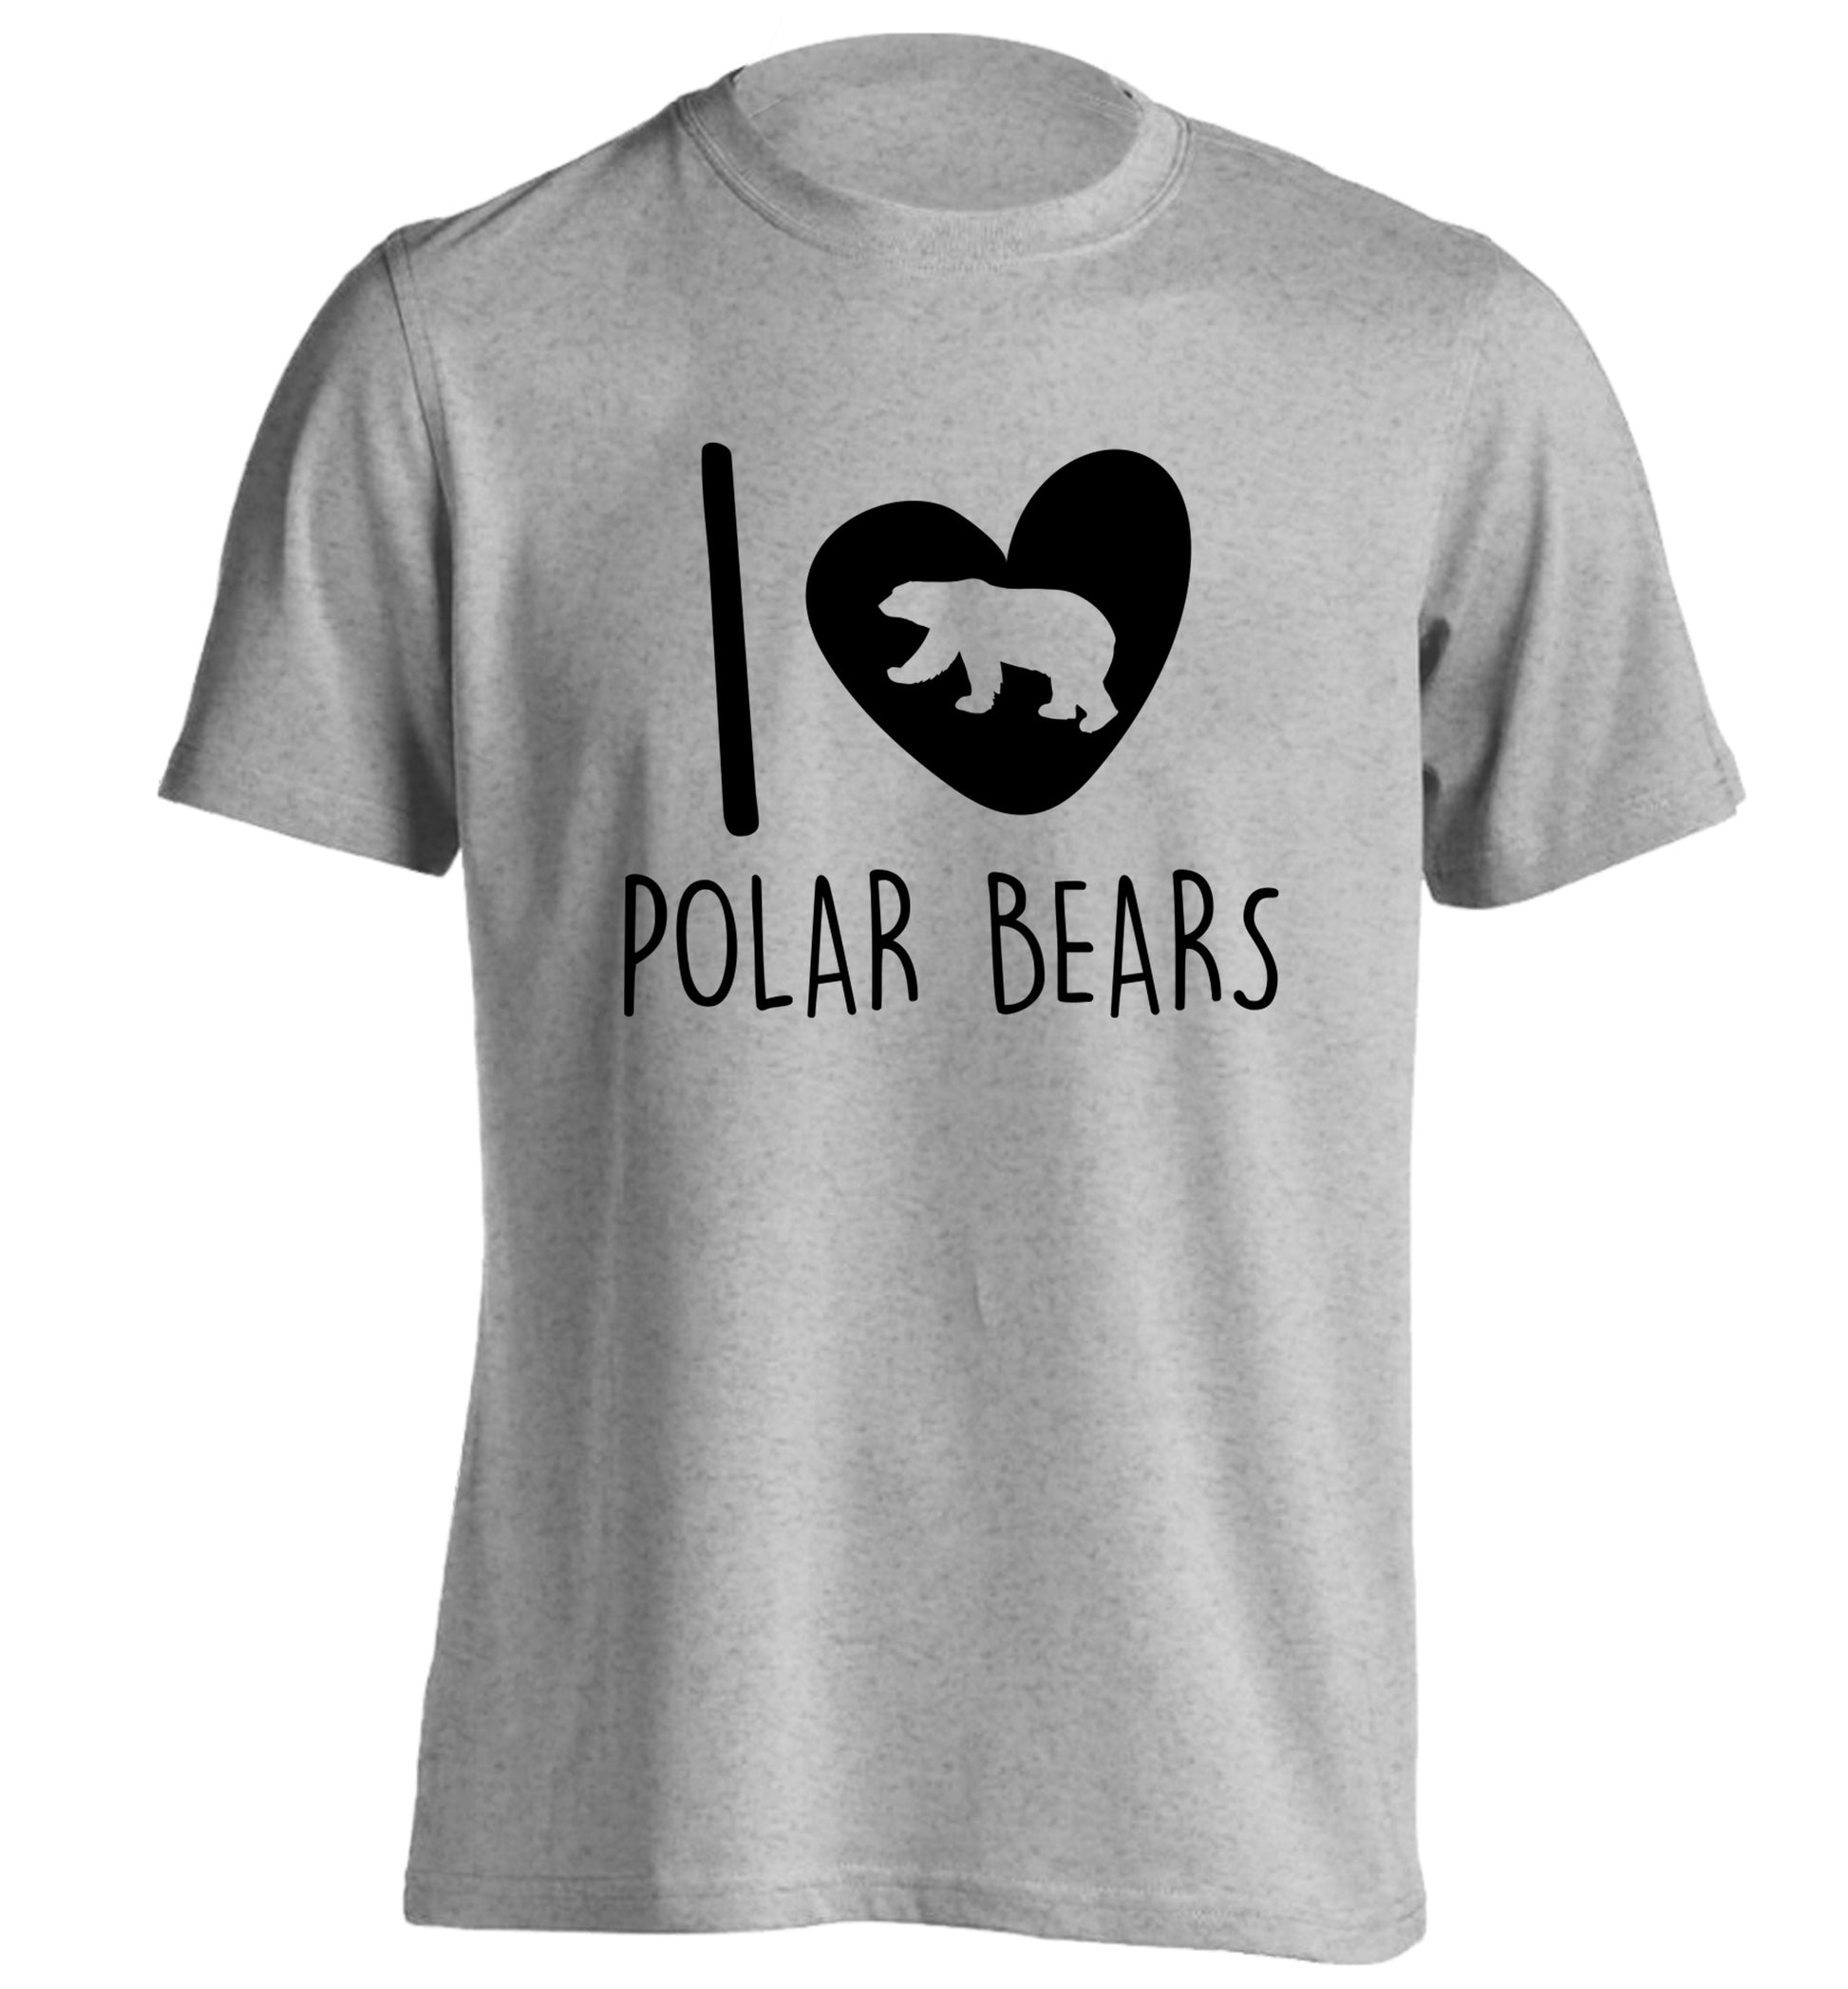 I Love Polar Bears adults unisex grey Tshirt 2XL